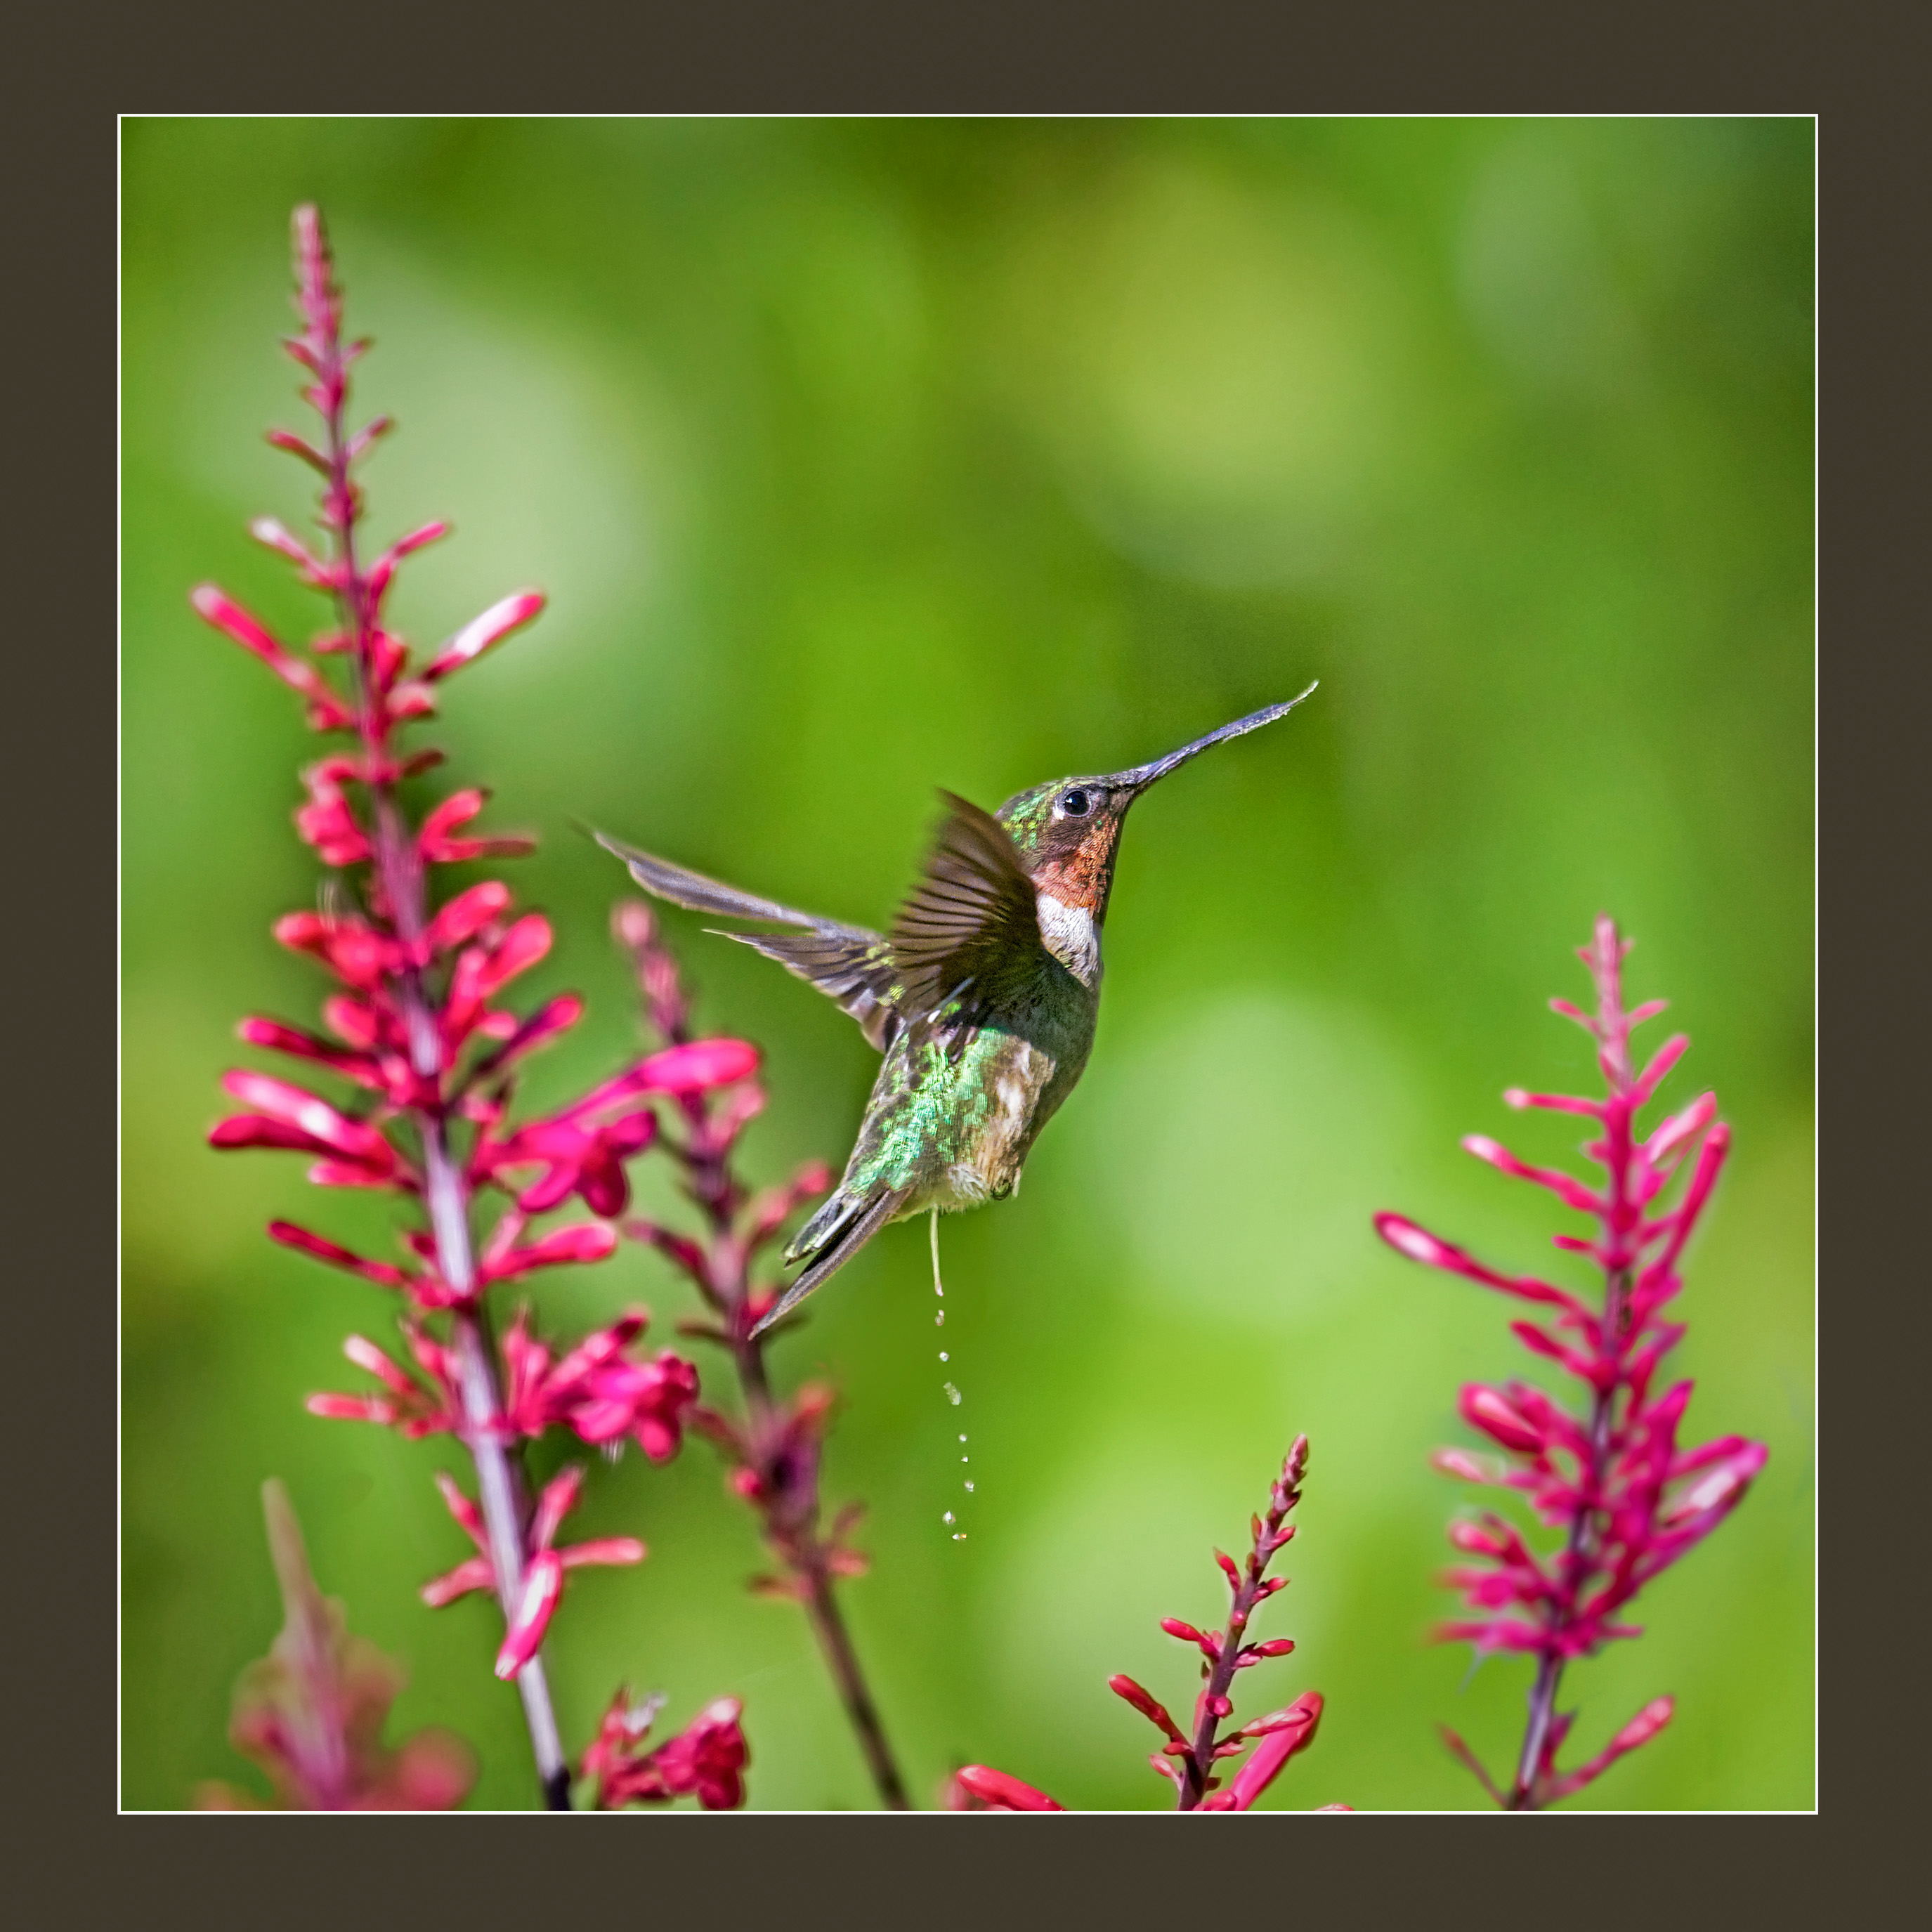 Not Your Typical Hummingbird Shot